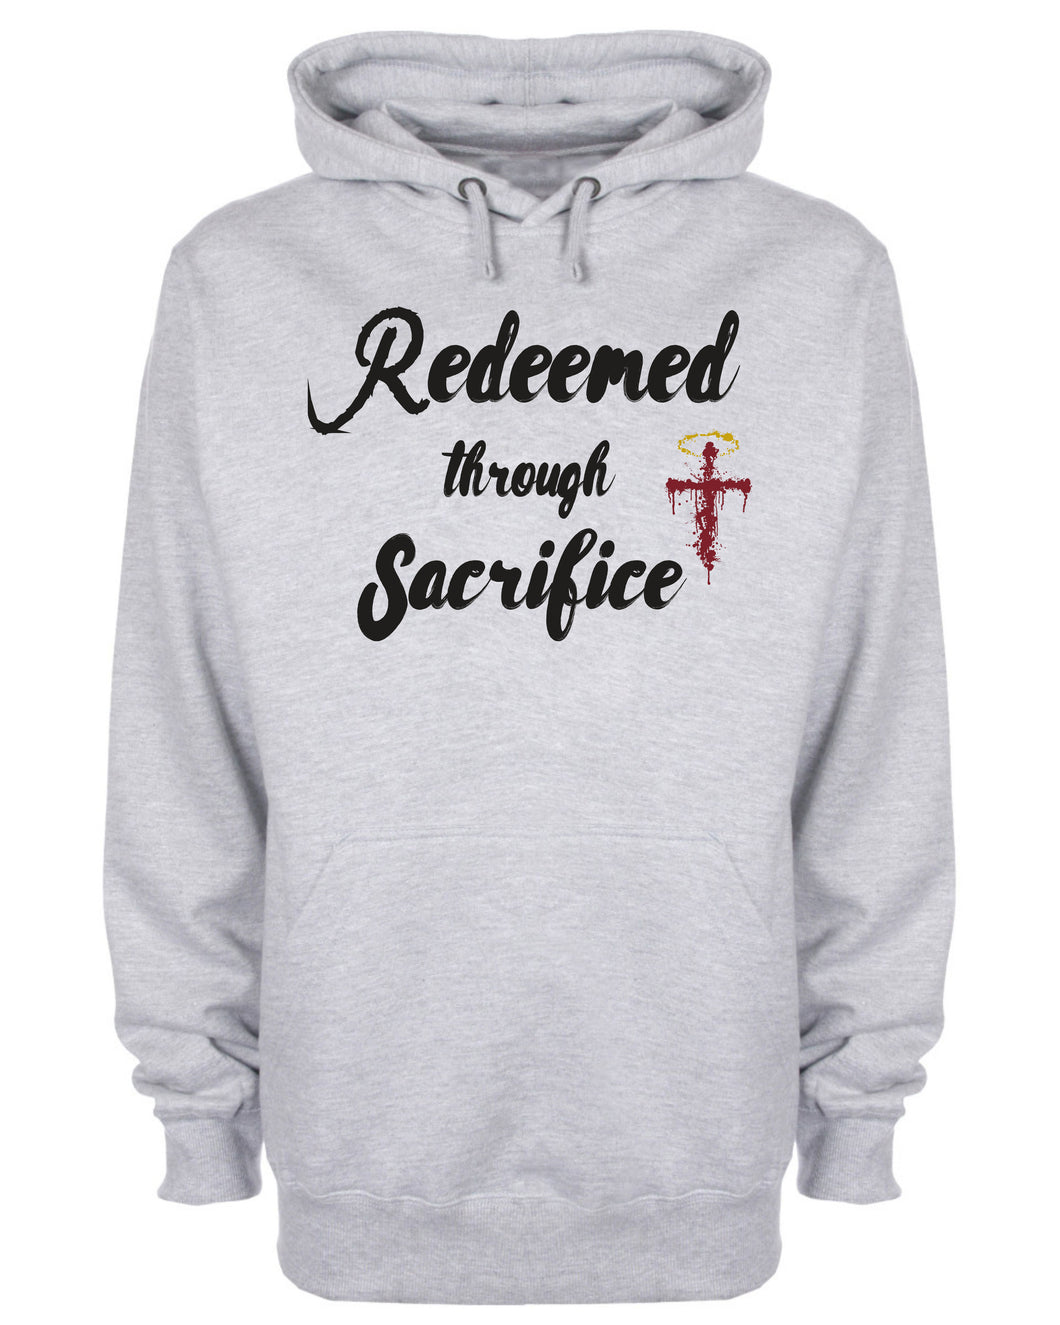 Redeemed Through Sacrifice Hoodie Jesus Christ Religious Hooded Sweatshirt